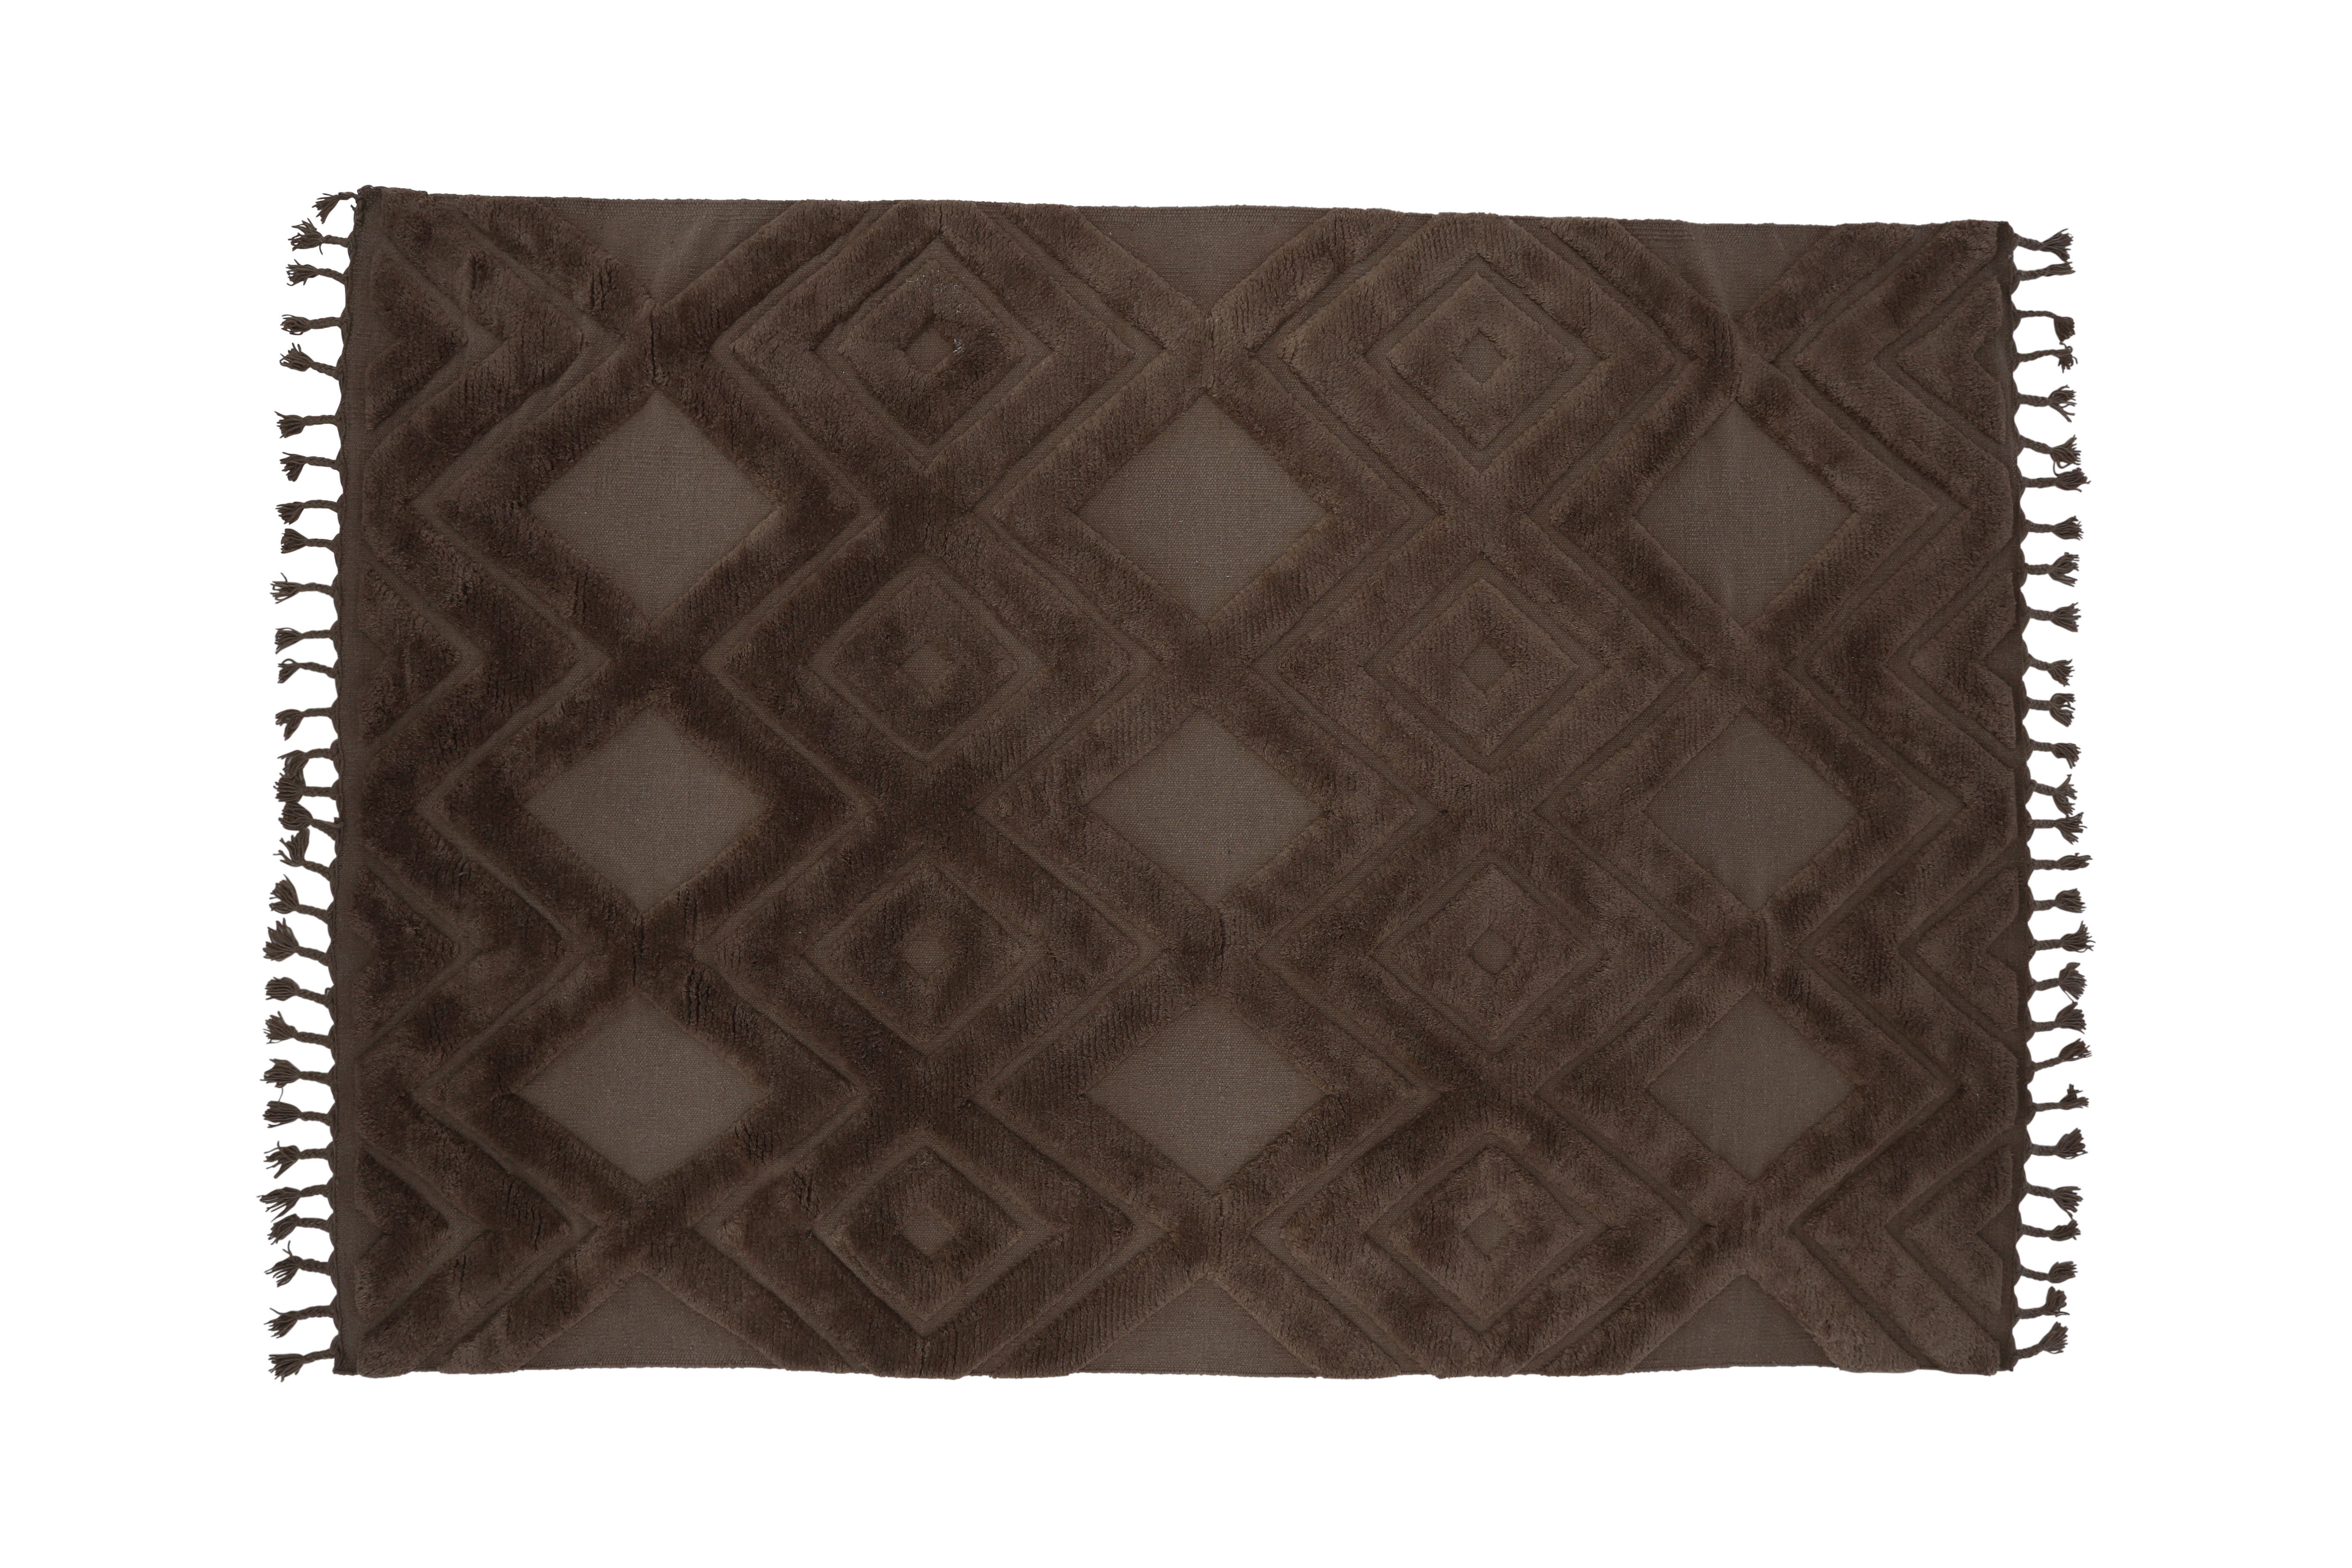 Billede af VIND COLLECTION Dahliawool gulvtæppe, rektangulær - brun nougat uld (230x160)